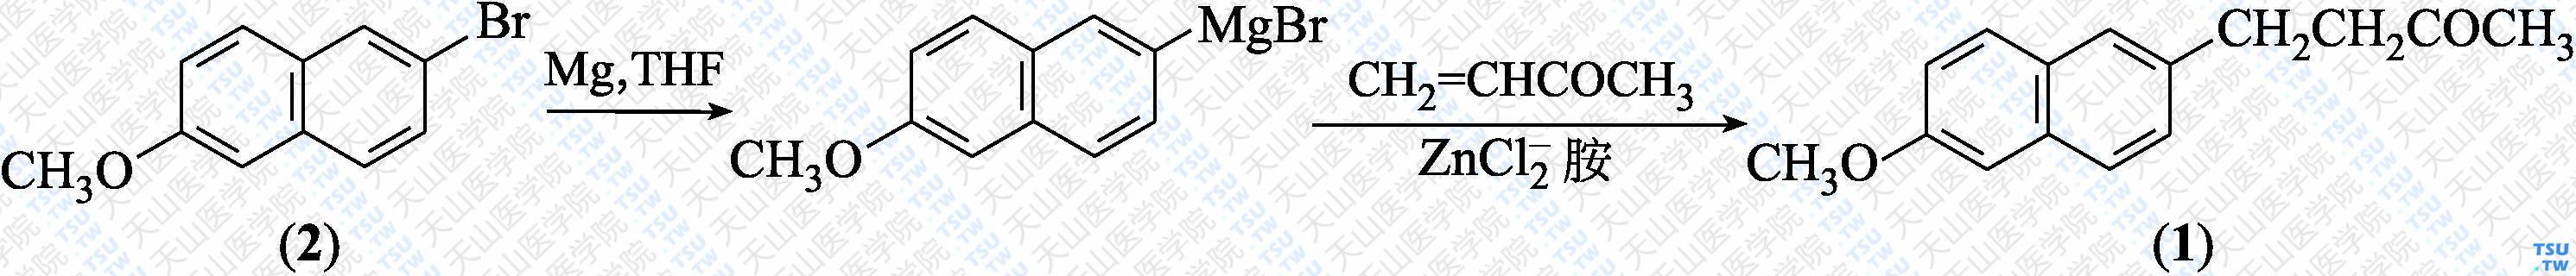 萘丁美酮（分子式：C<sub>15</sub>H<sub>16</sub>O<sub>2</sub>）的合成方法路线及其结构式